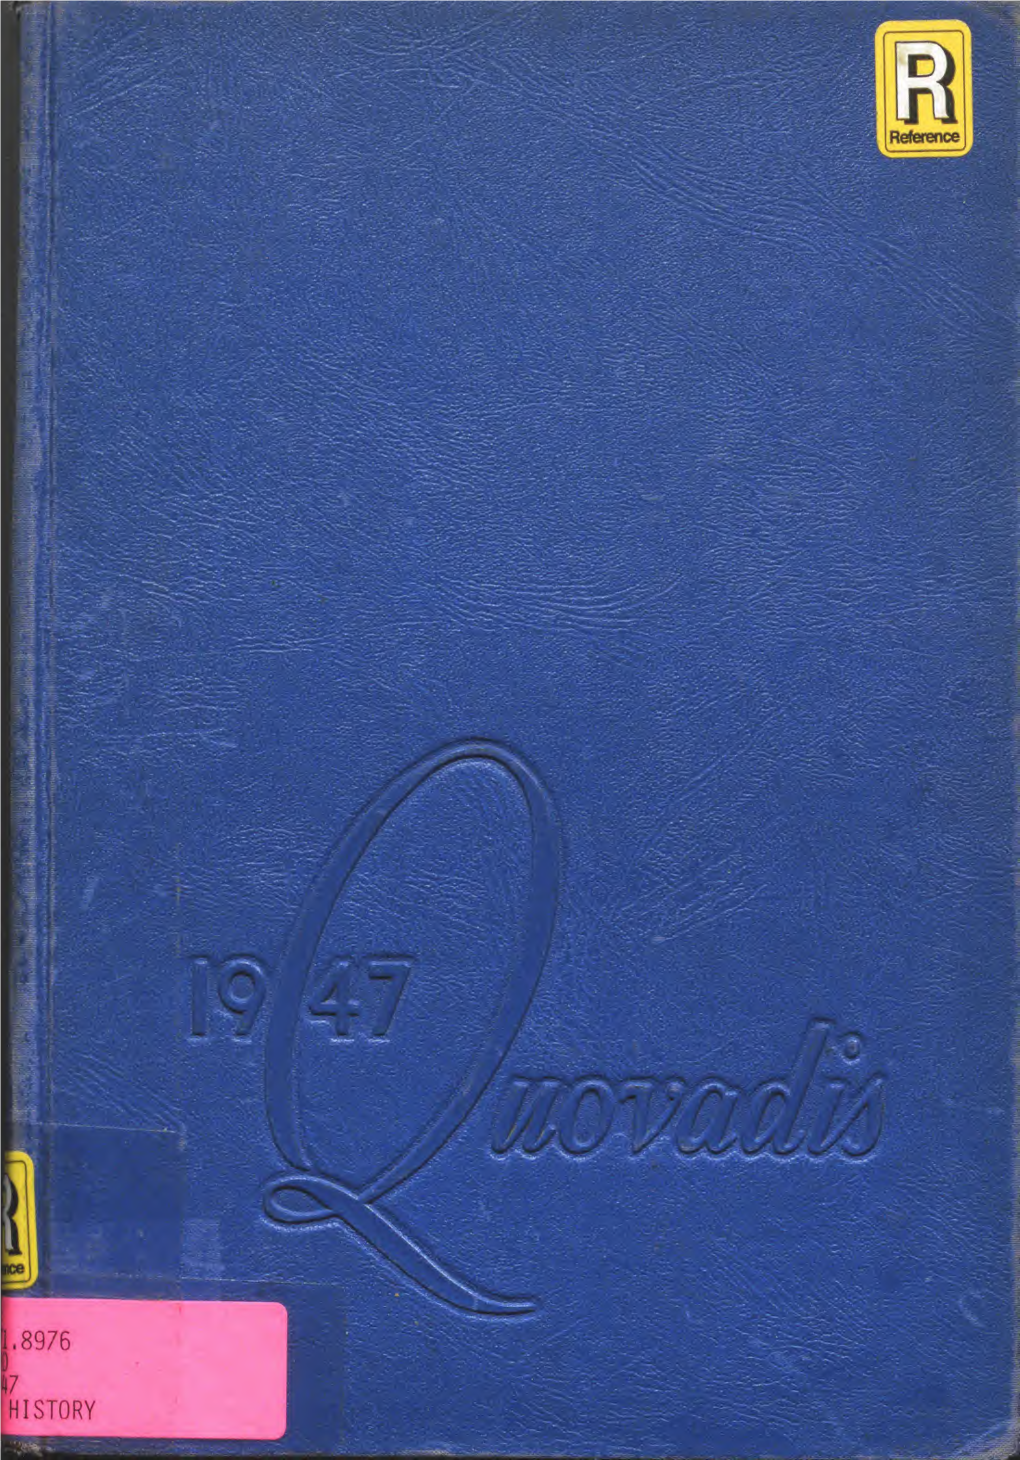 1947 Ouovadis